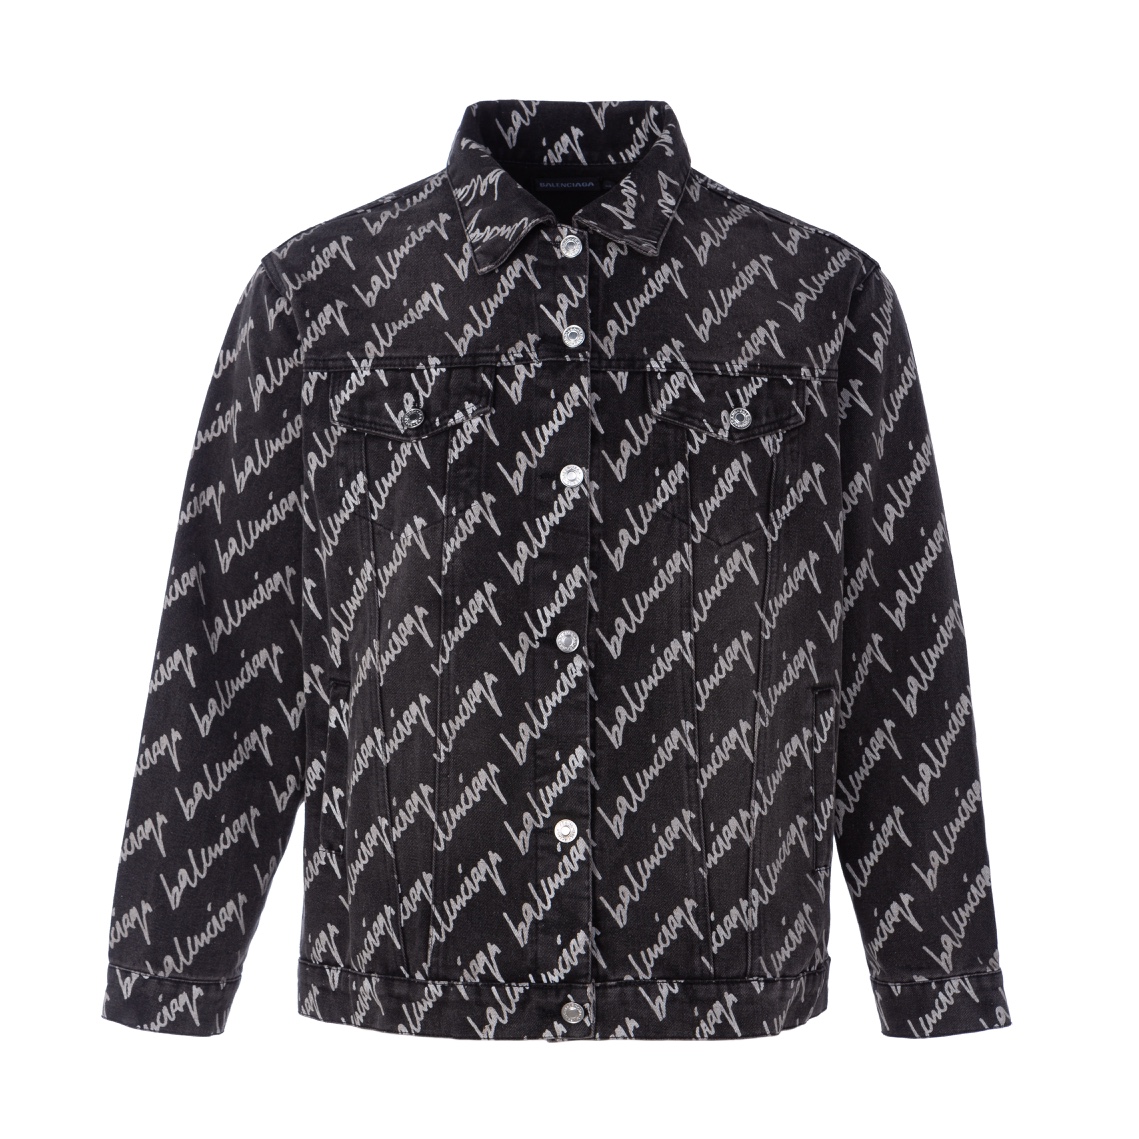 Balenciaga Clothing Coats & Jackets Black Blue White Printing Cotton Spandex Spring/Fall Collection